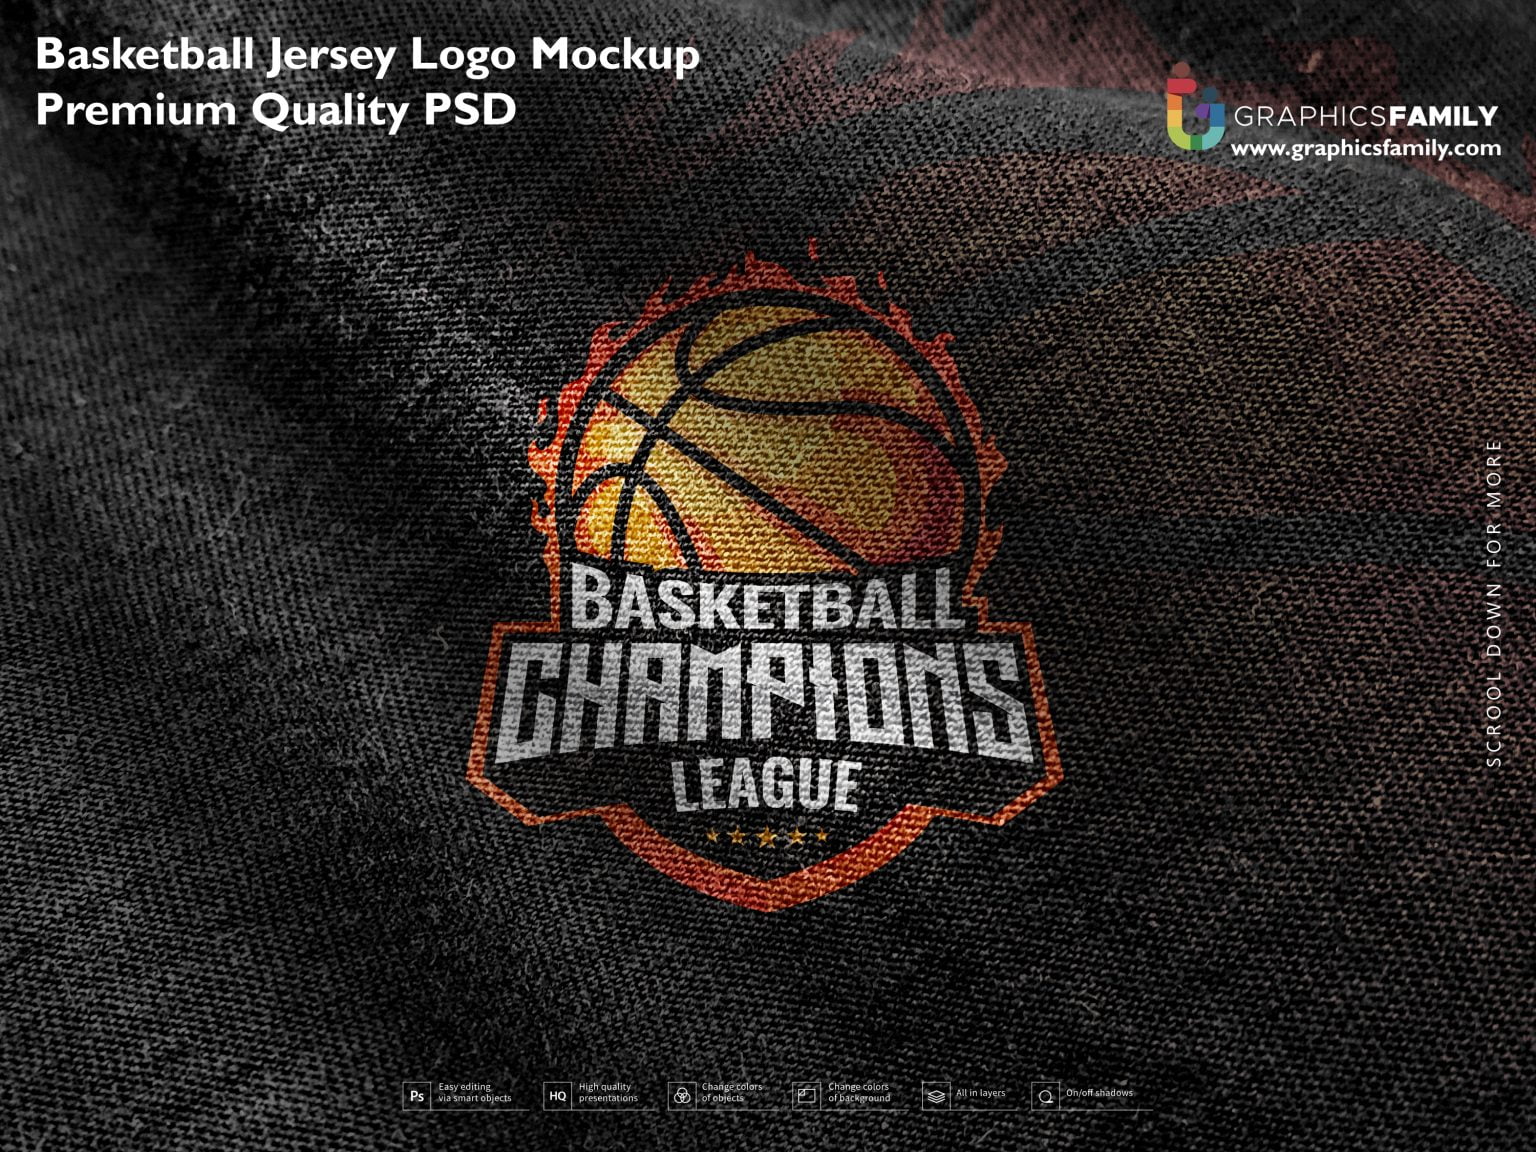 Jersey logo mockup free information